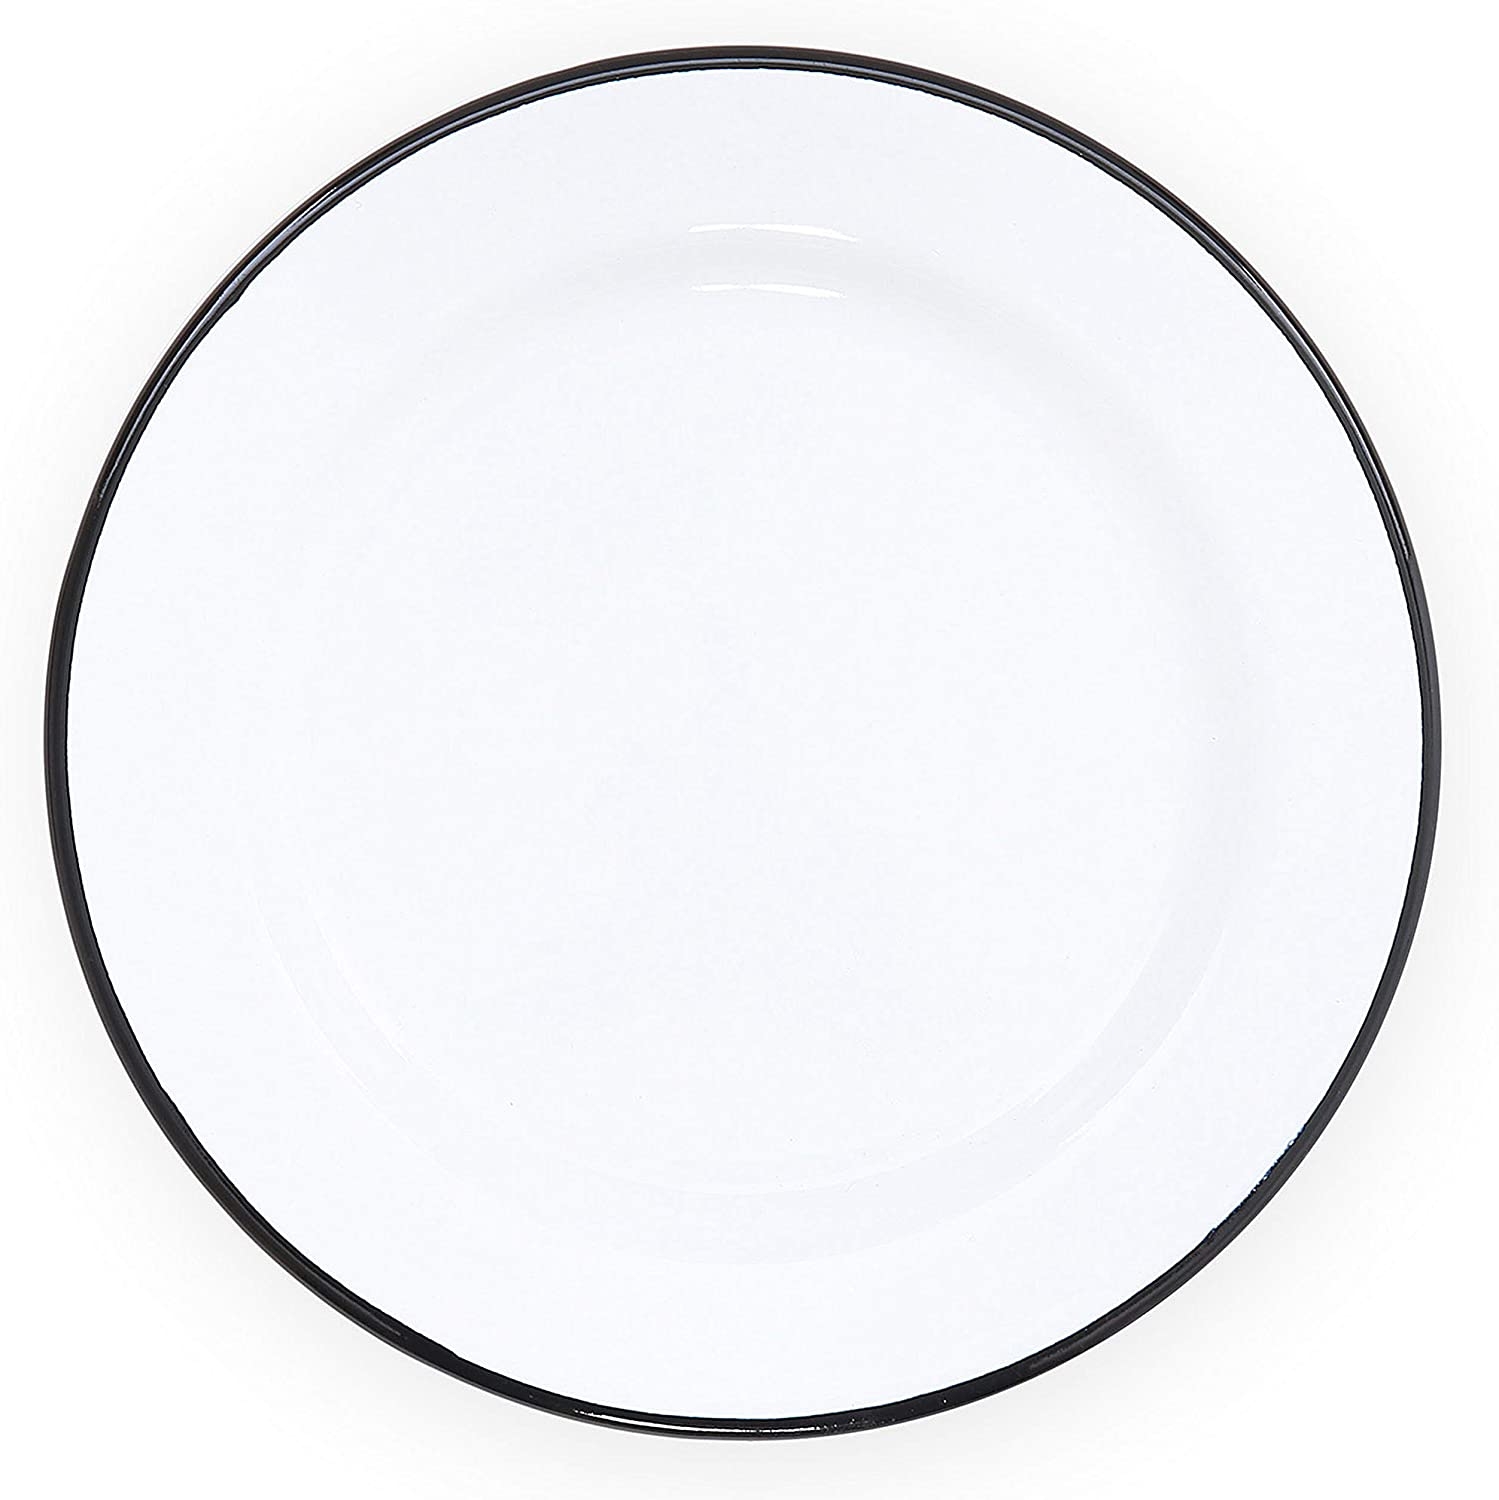 Ободок тарелки. Белая тарелка. Тарелка плоская. Прозрачная тарелка. Круглая тарелка.